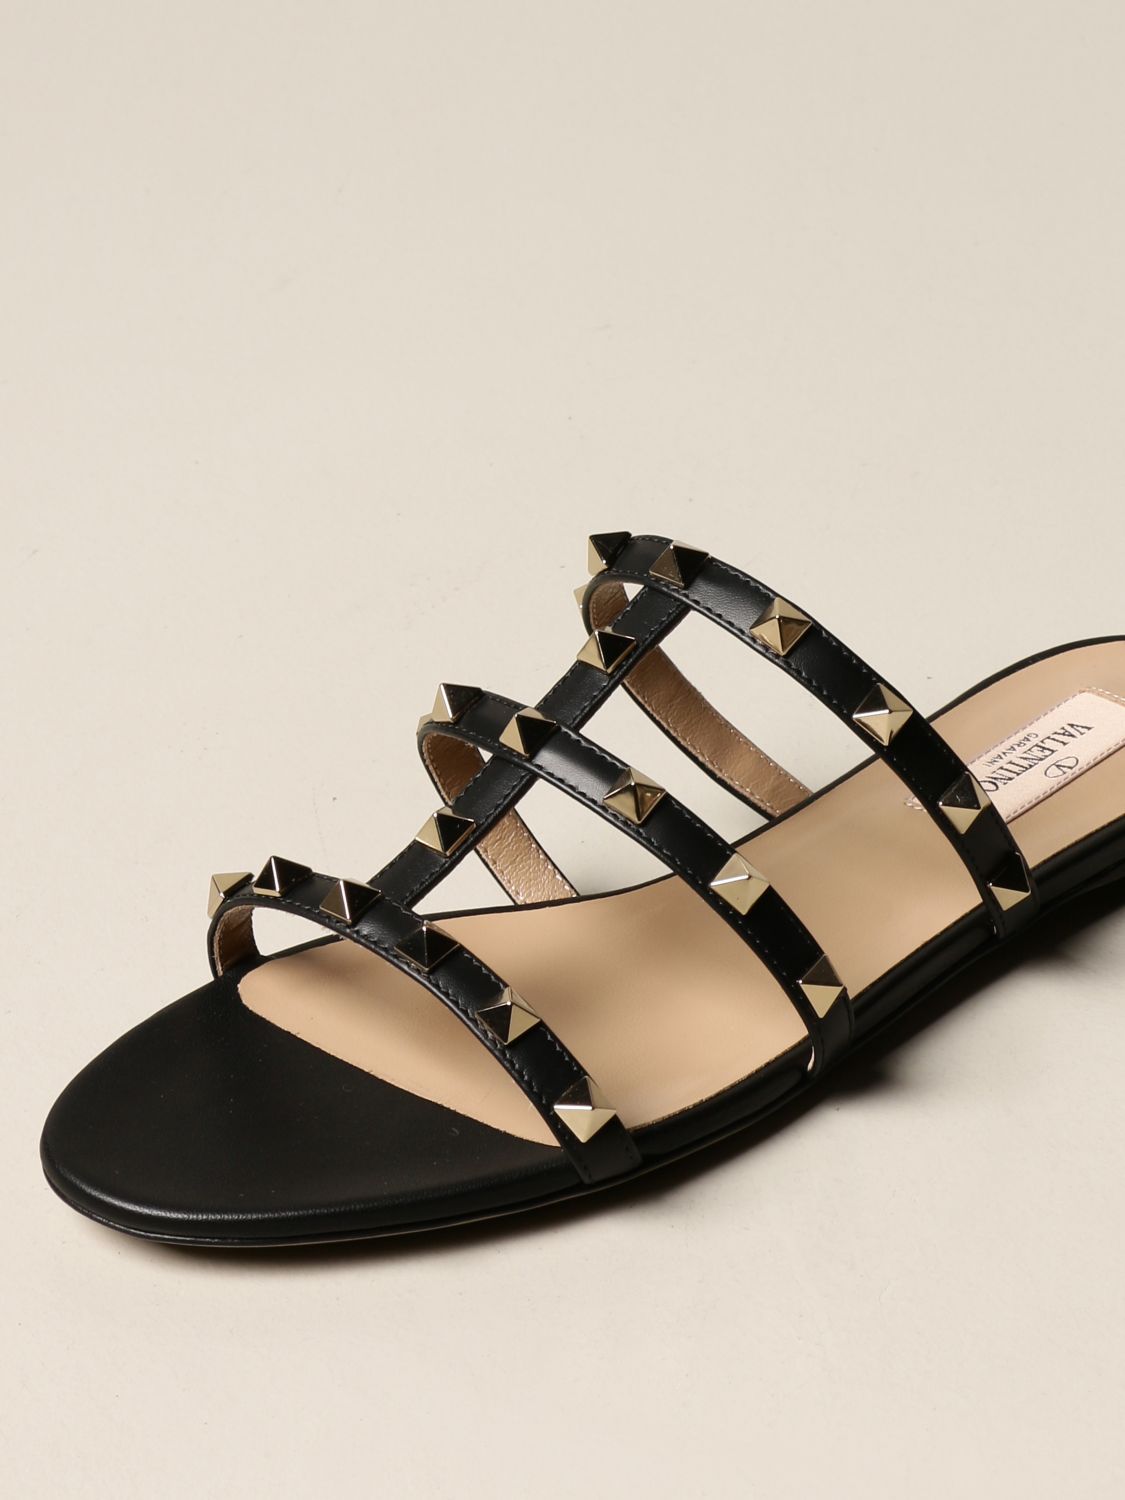 VALENTINO GARAVANI: leather sandal with studs | Flat Sandals Valentino ...